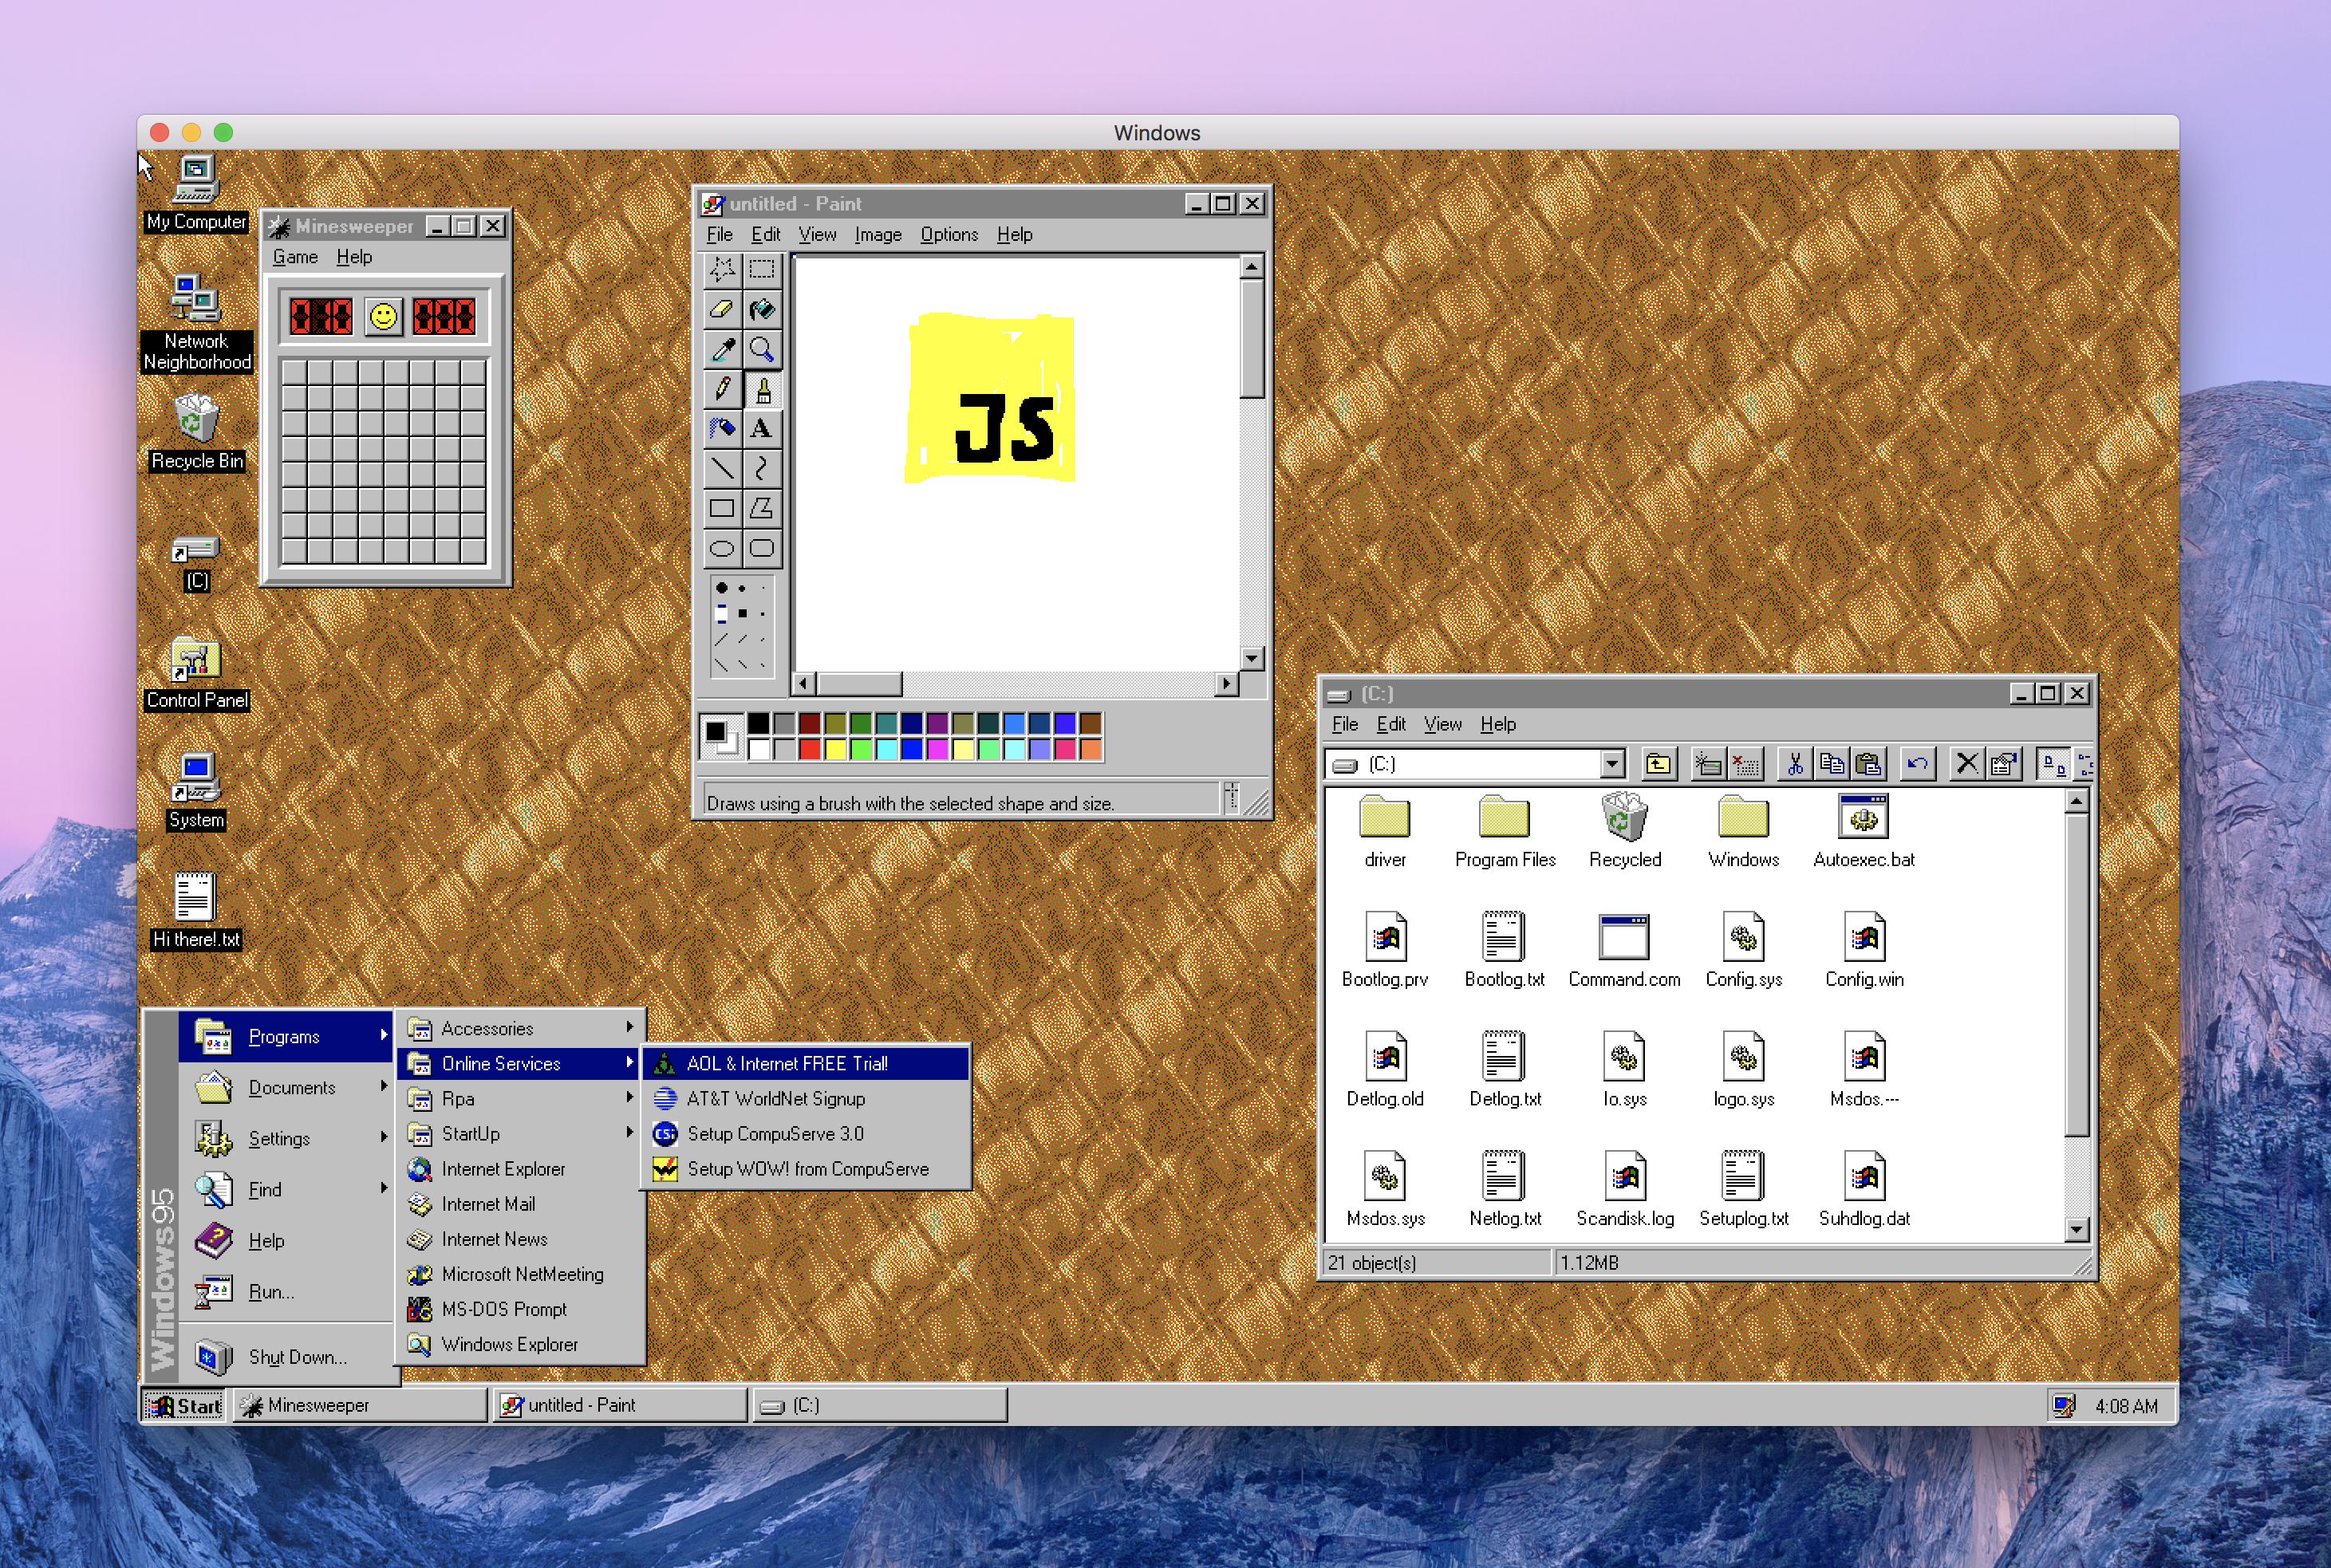 Windows 95 is an App now!